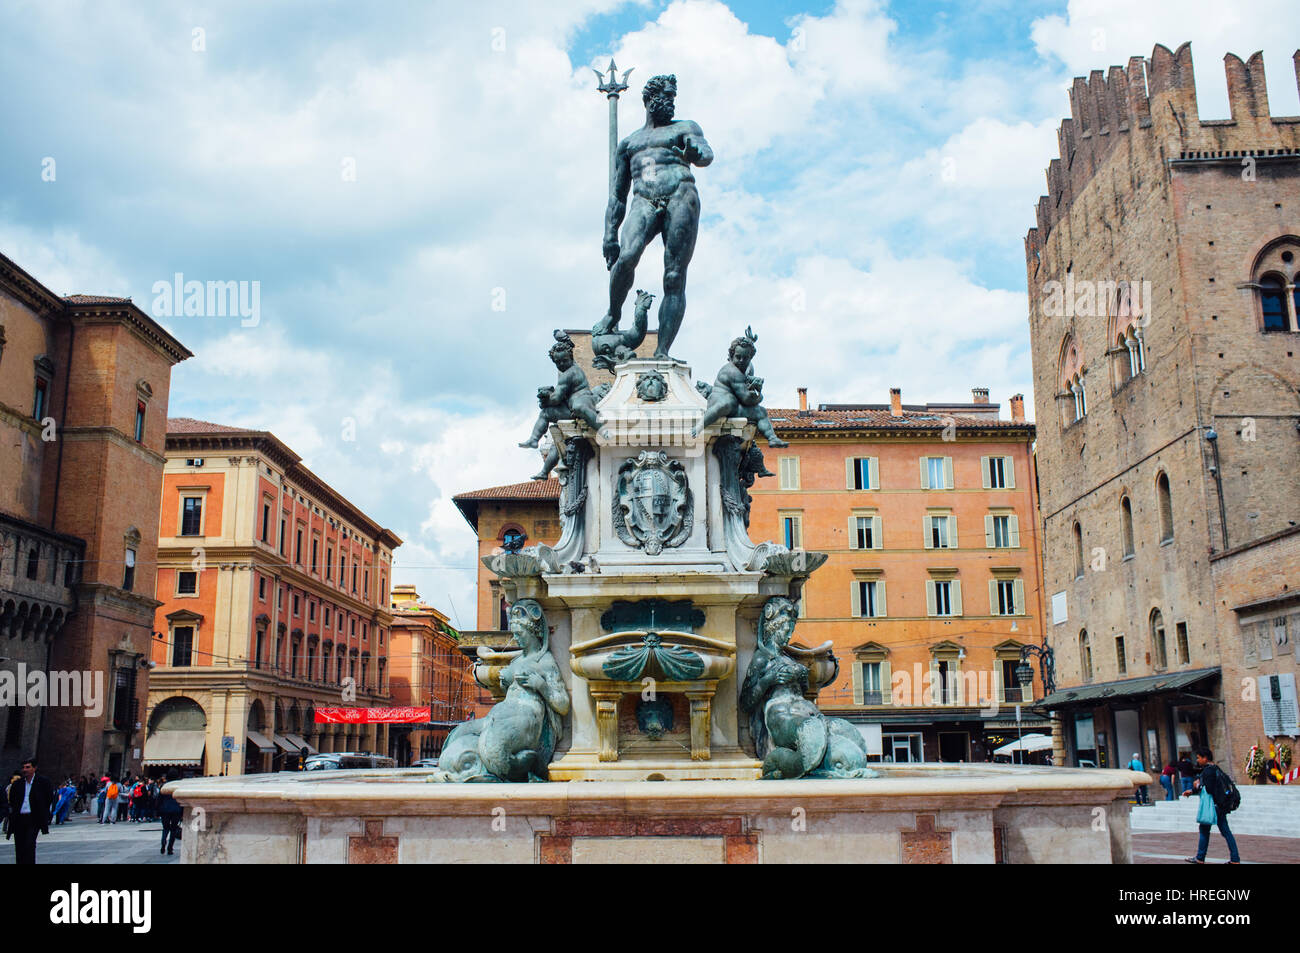 The Fontana del Nettuno located at the Piazza del Nettuno is one of the main tourist attraction in Bologna, Italy. Stock Photo